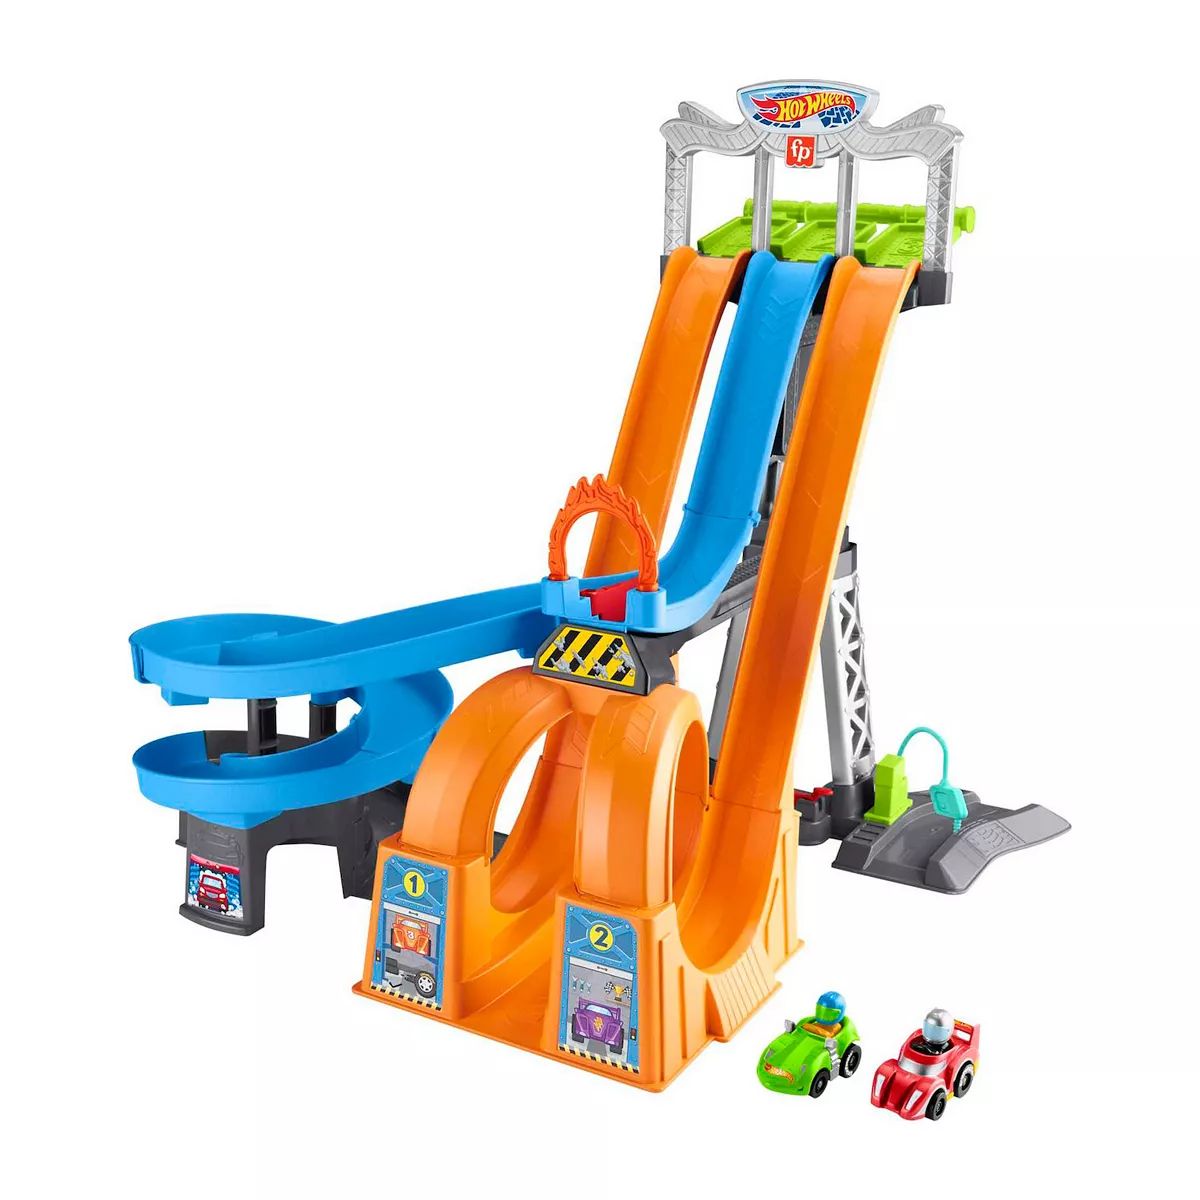 Hot Wheels Racing Loops Tower Track Playset by Little People | Kohl's